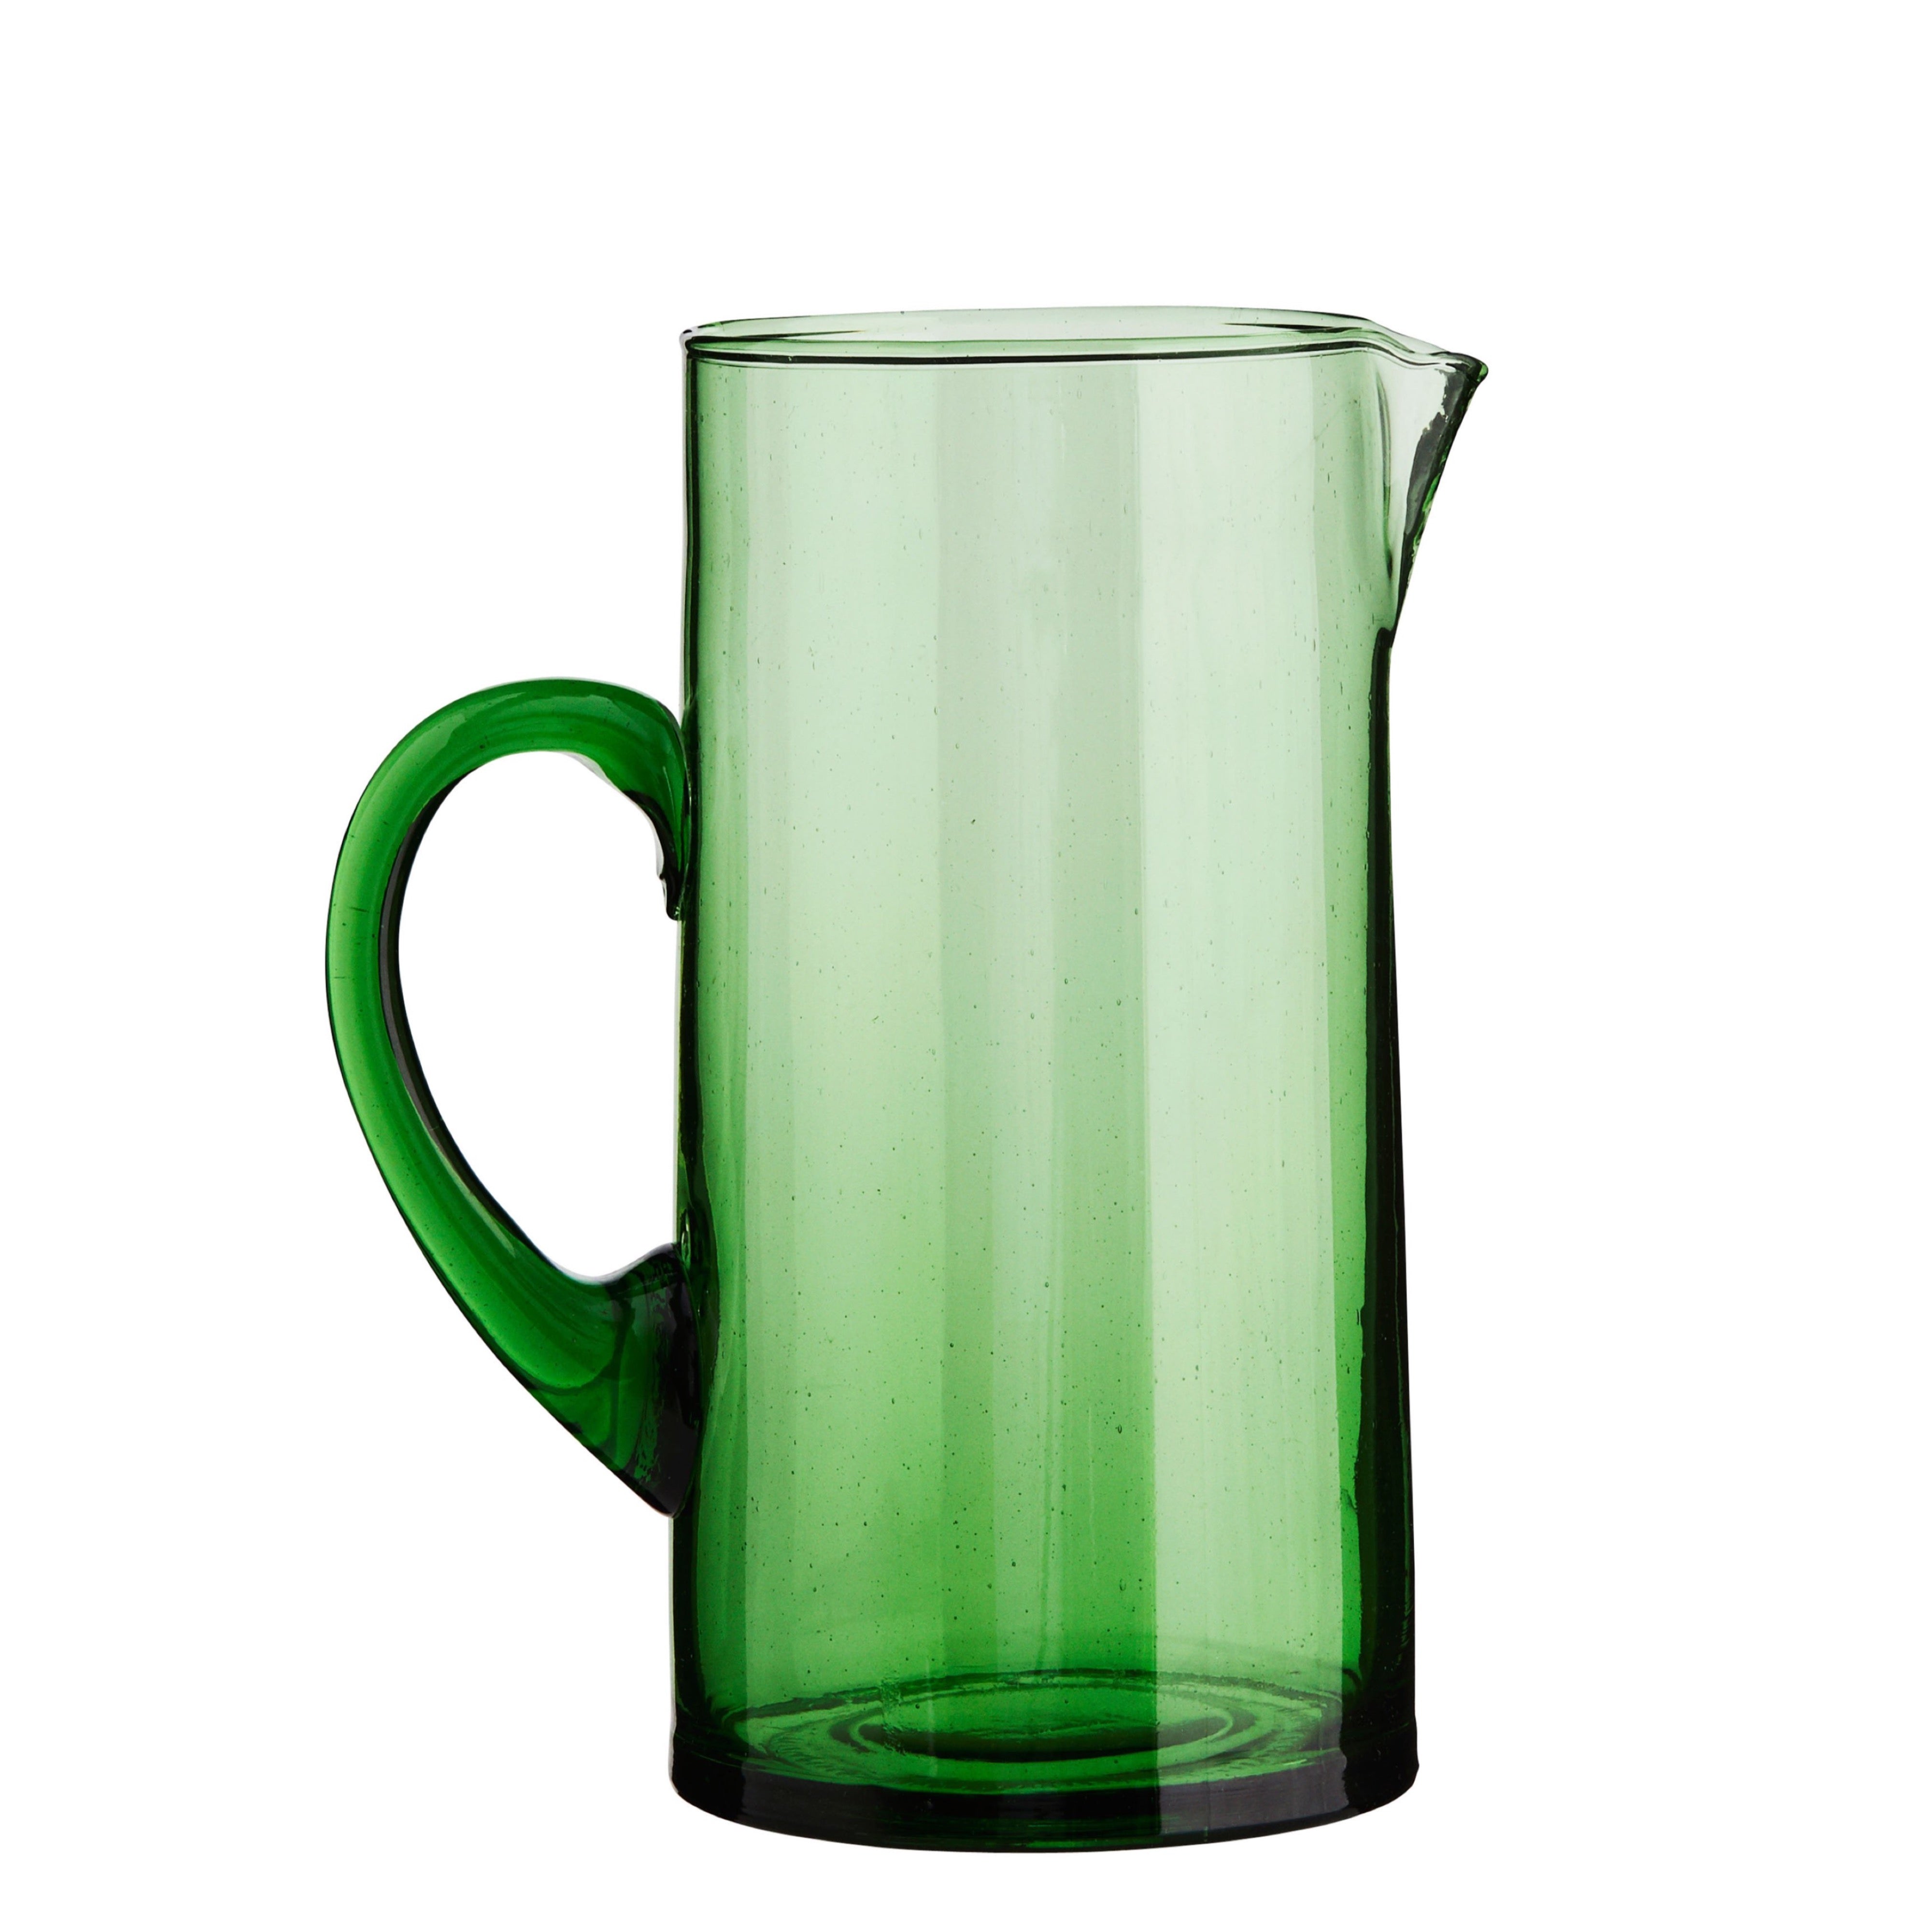 'MOROCCO' RECYCLED GREEN GLASS JUG